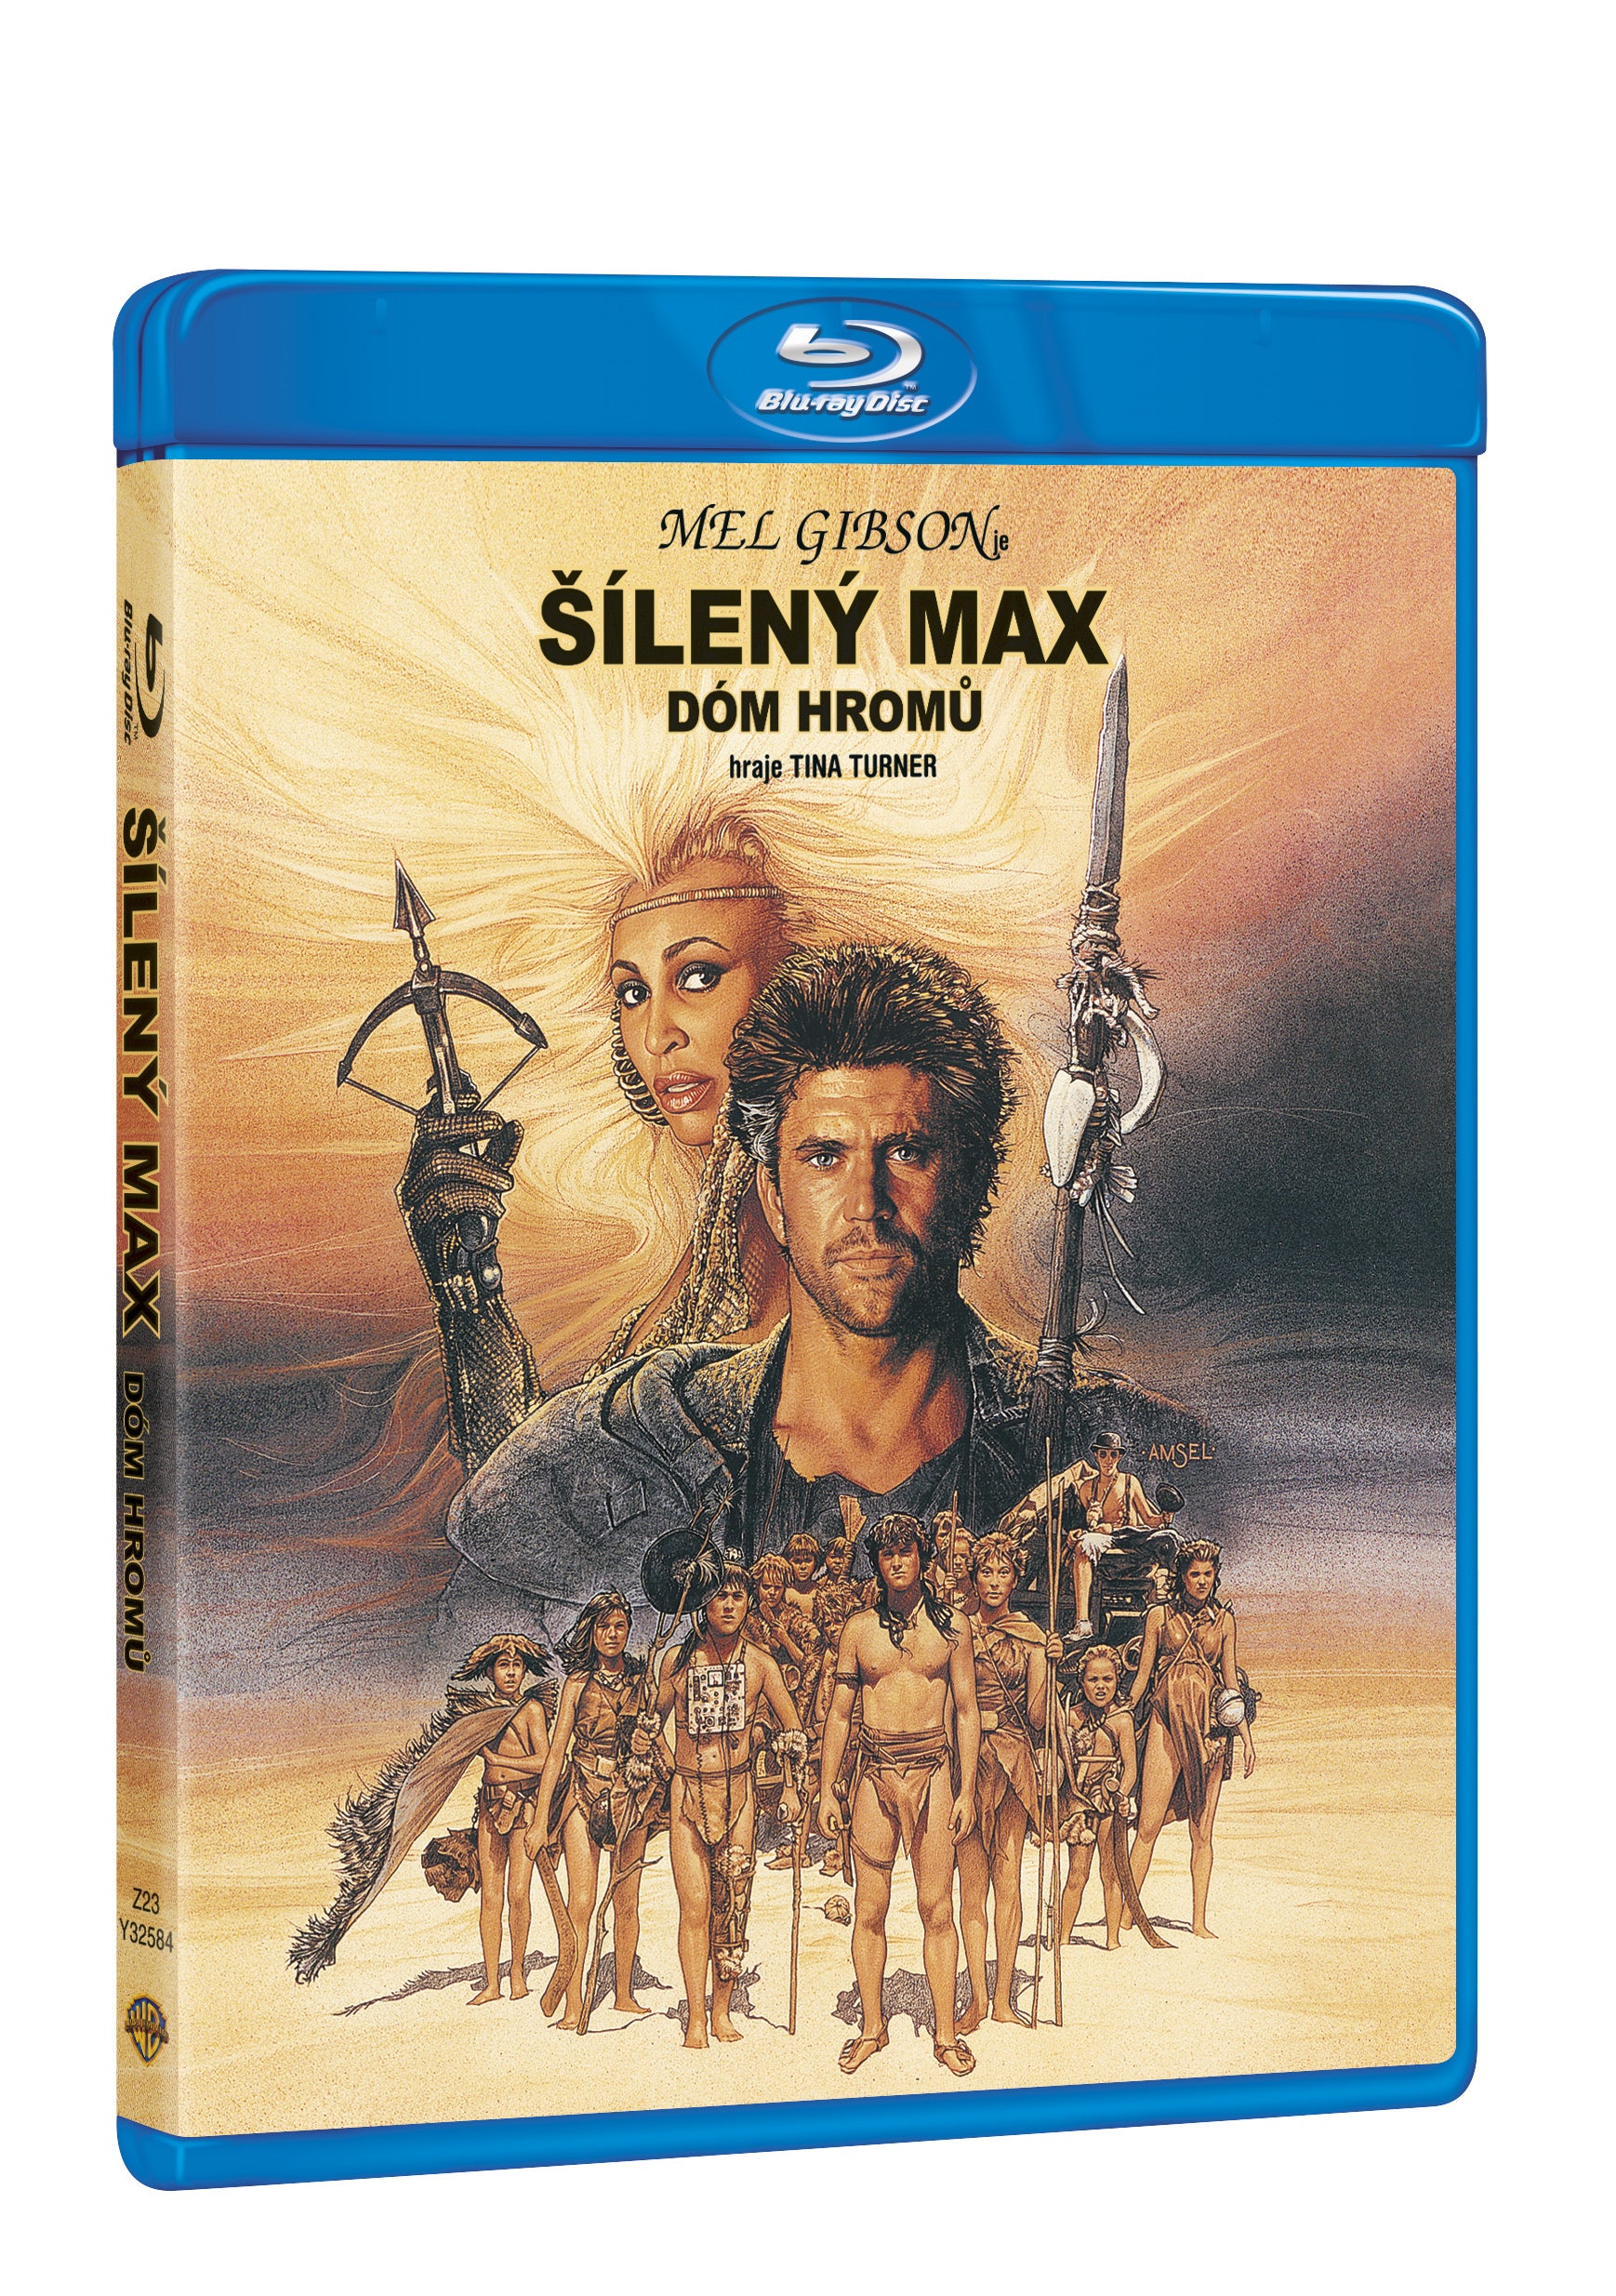 Sileny Max 3: Dom hromu BD / Mad Max 3: Beyond Thunderdome - Czech version